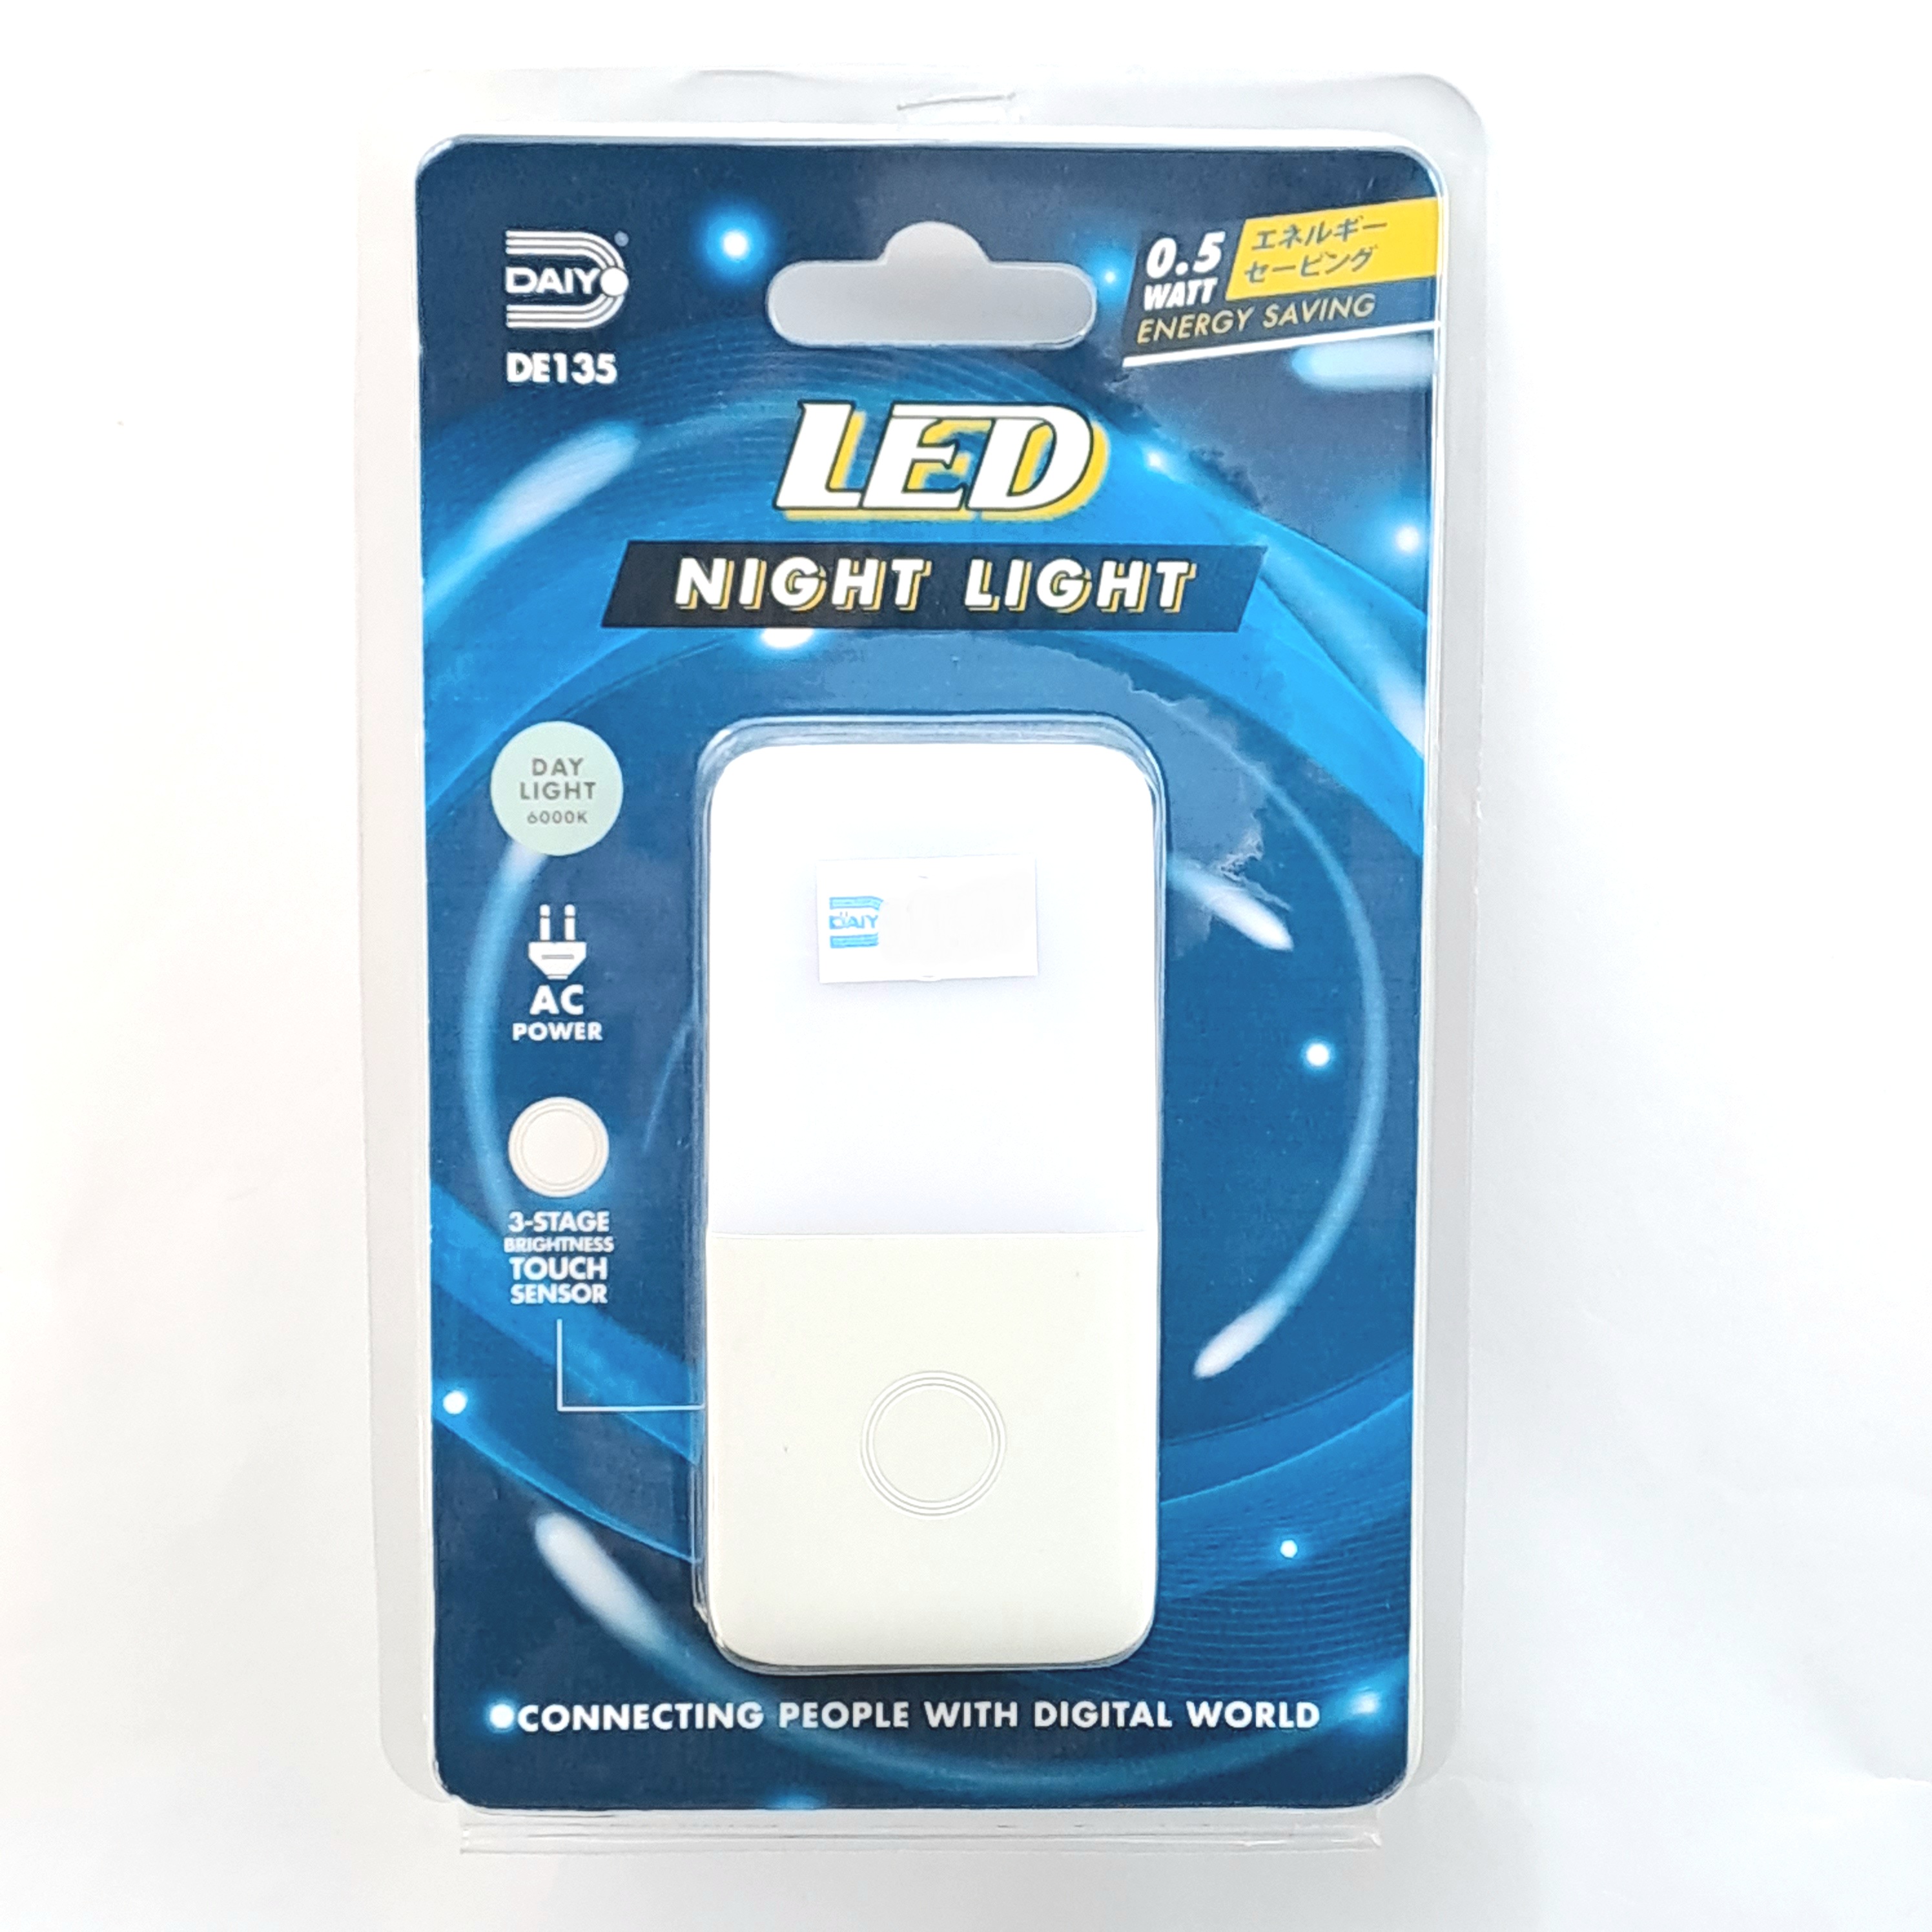 Daiyo LED Night Light 3-Stage Touch Sensor